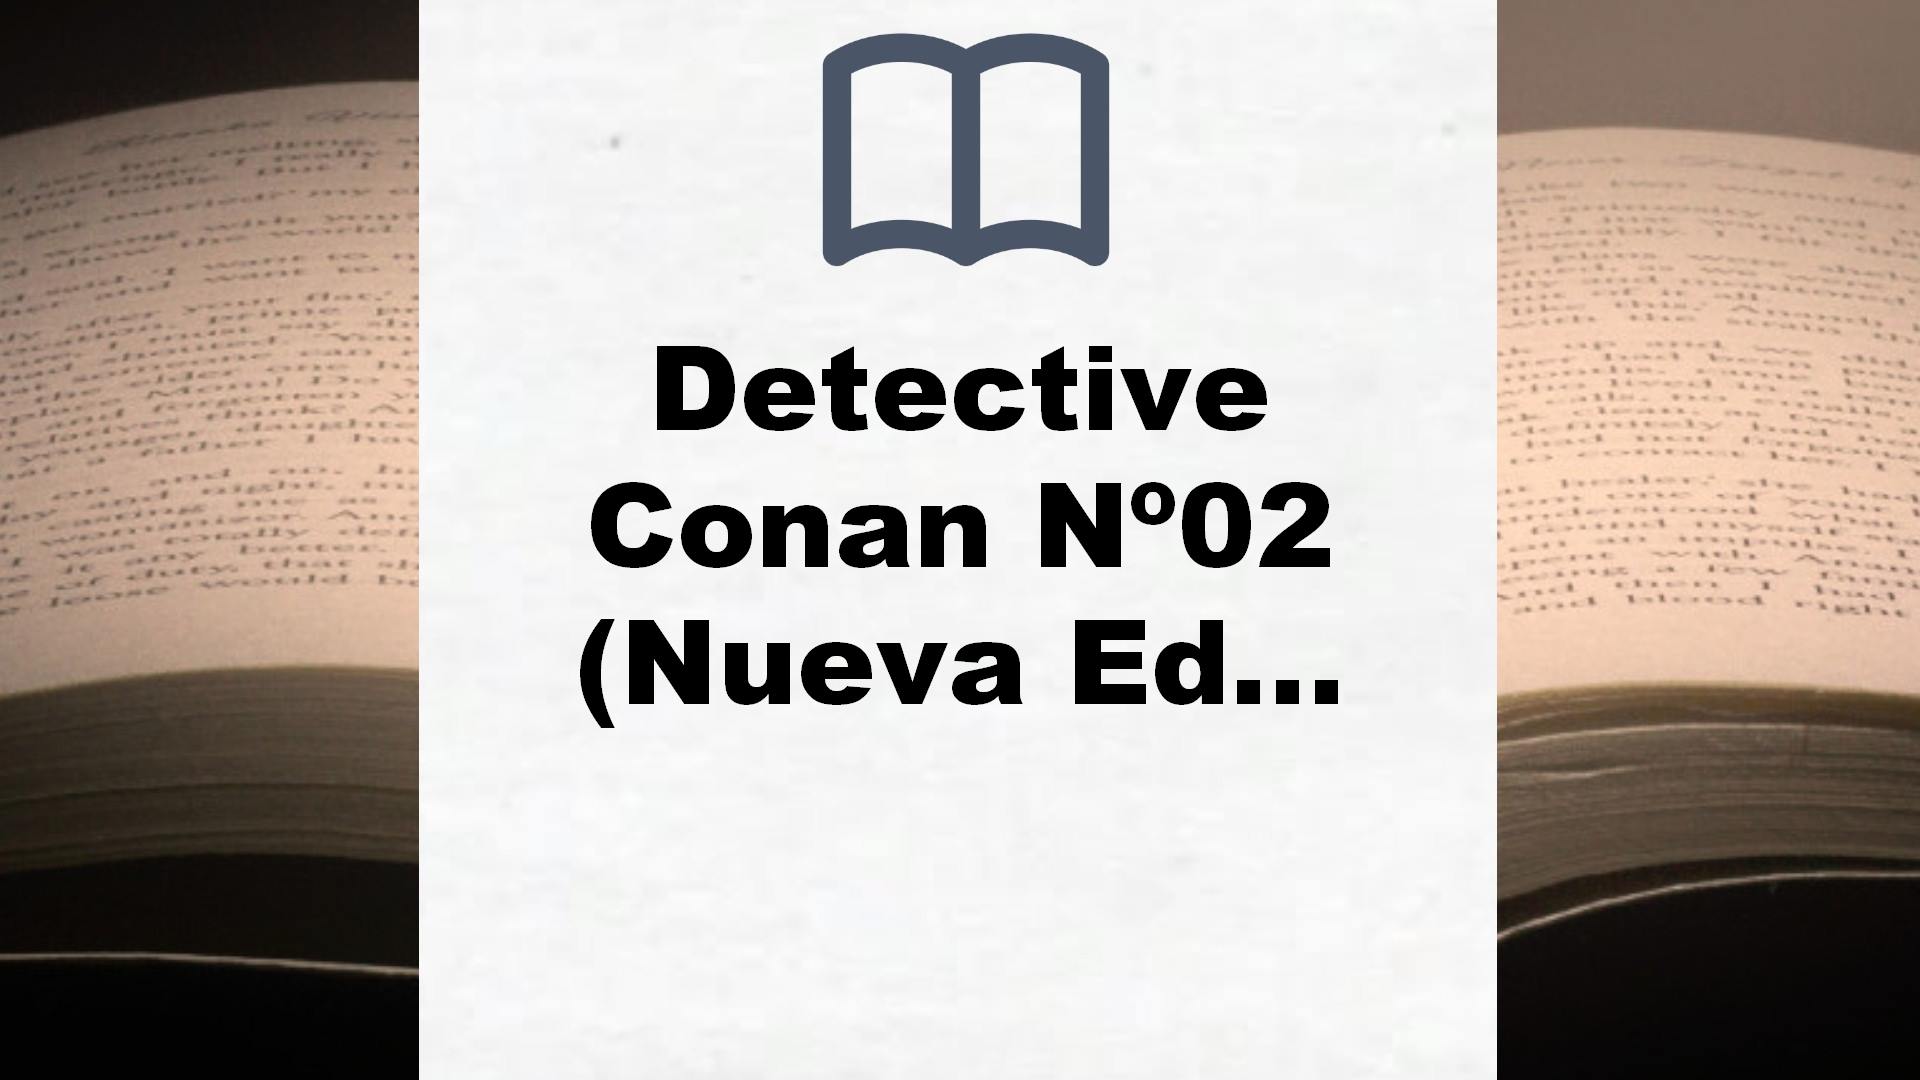 Detective Conan Nº02 (Nueva Ed) (Manga Shonen) – Reseña del libro